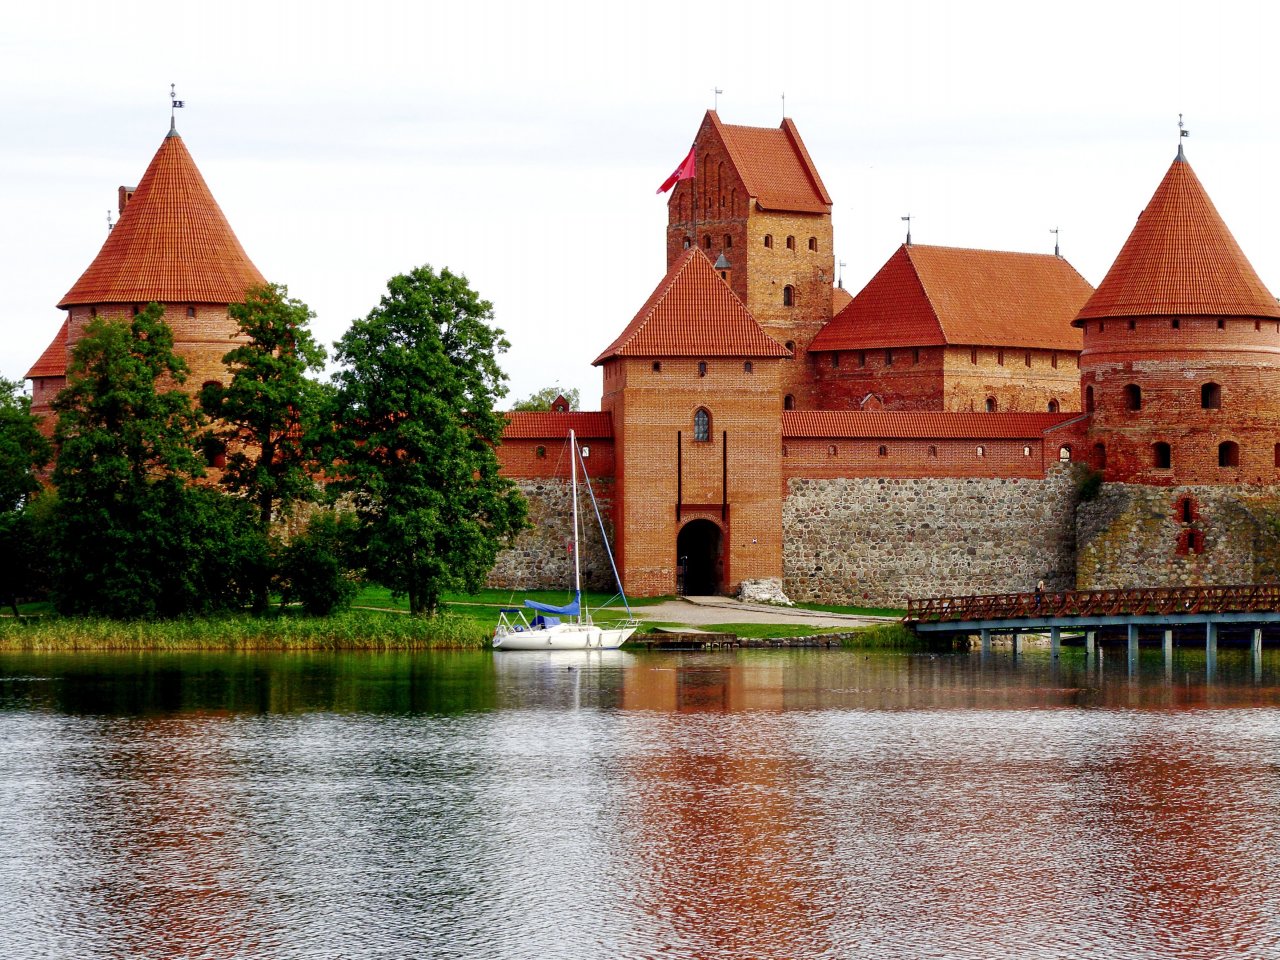 The Trakai Island Castle jigsaw puzzle